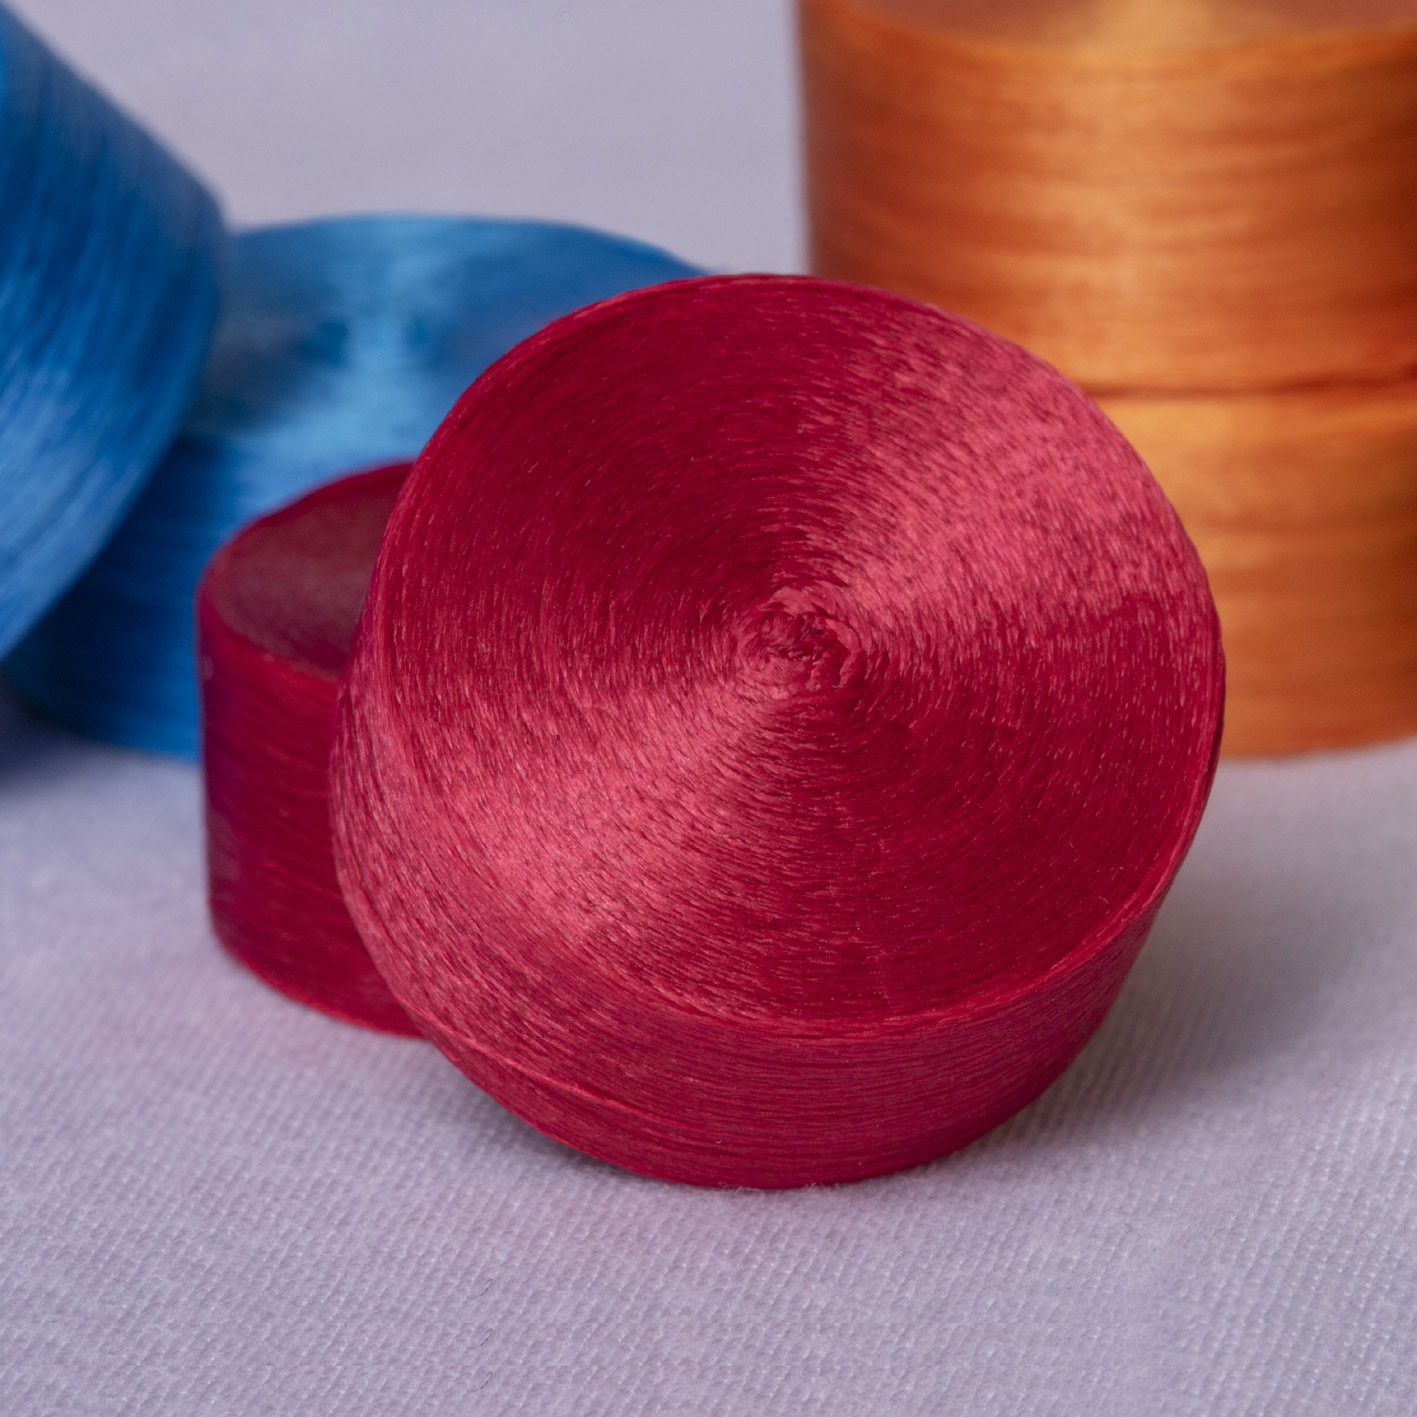 Duma centreless pre-wound under-bobbins hold more yarn to significantly reduce machine down times. © Durak Tekstil